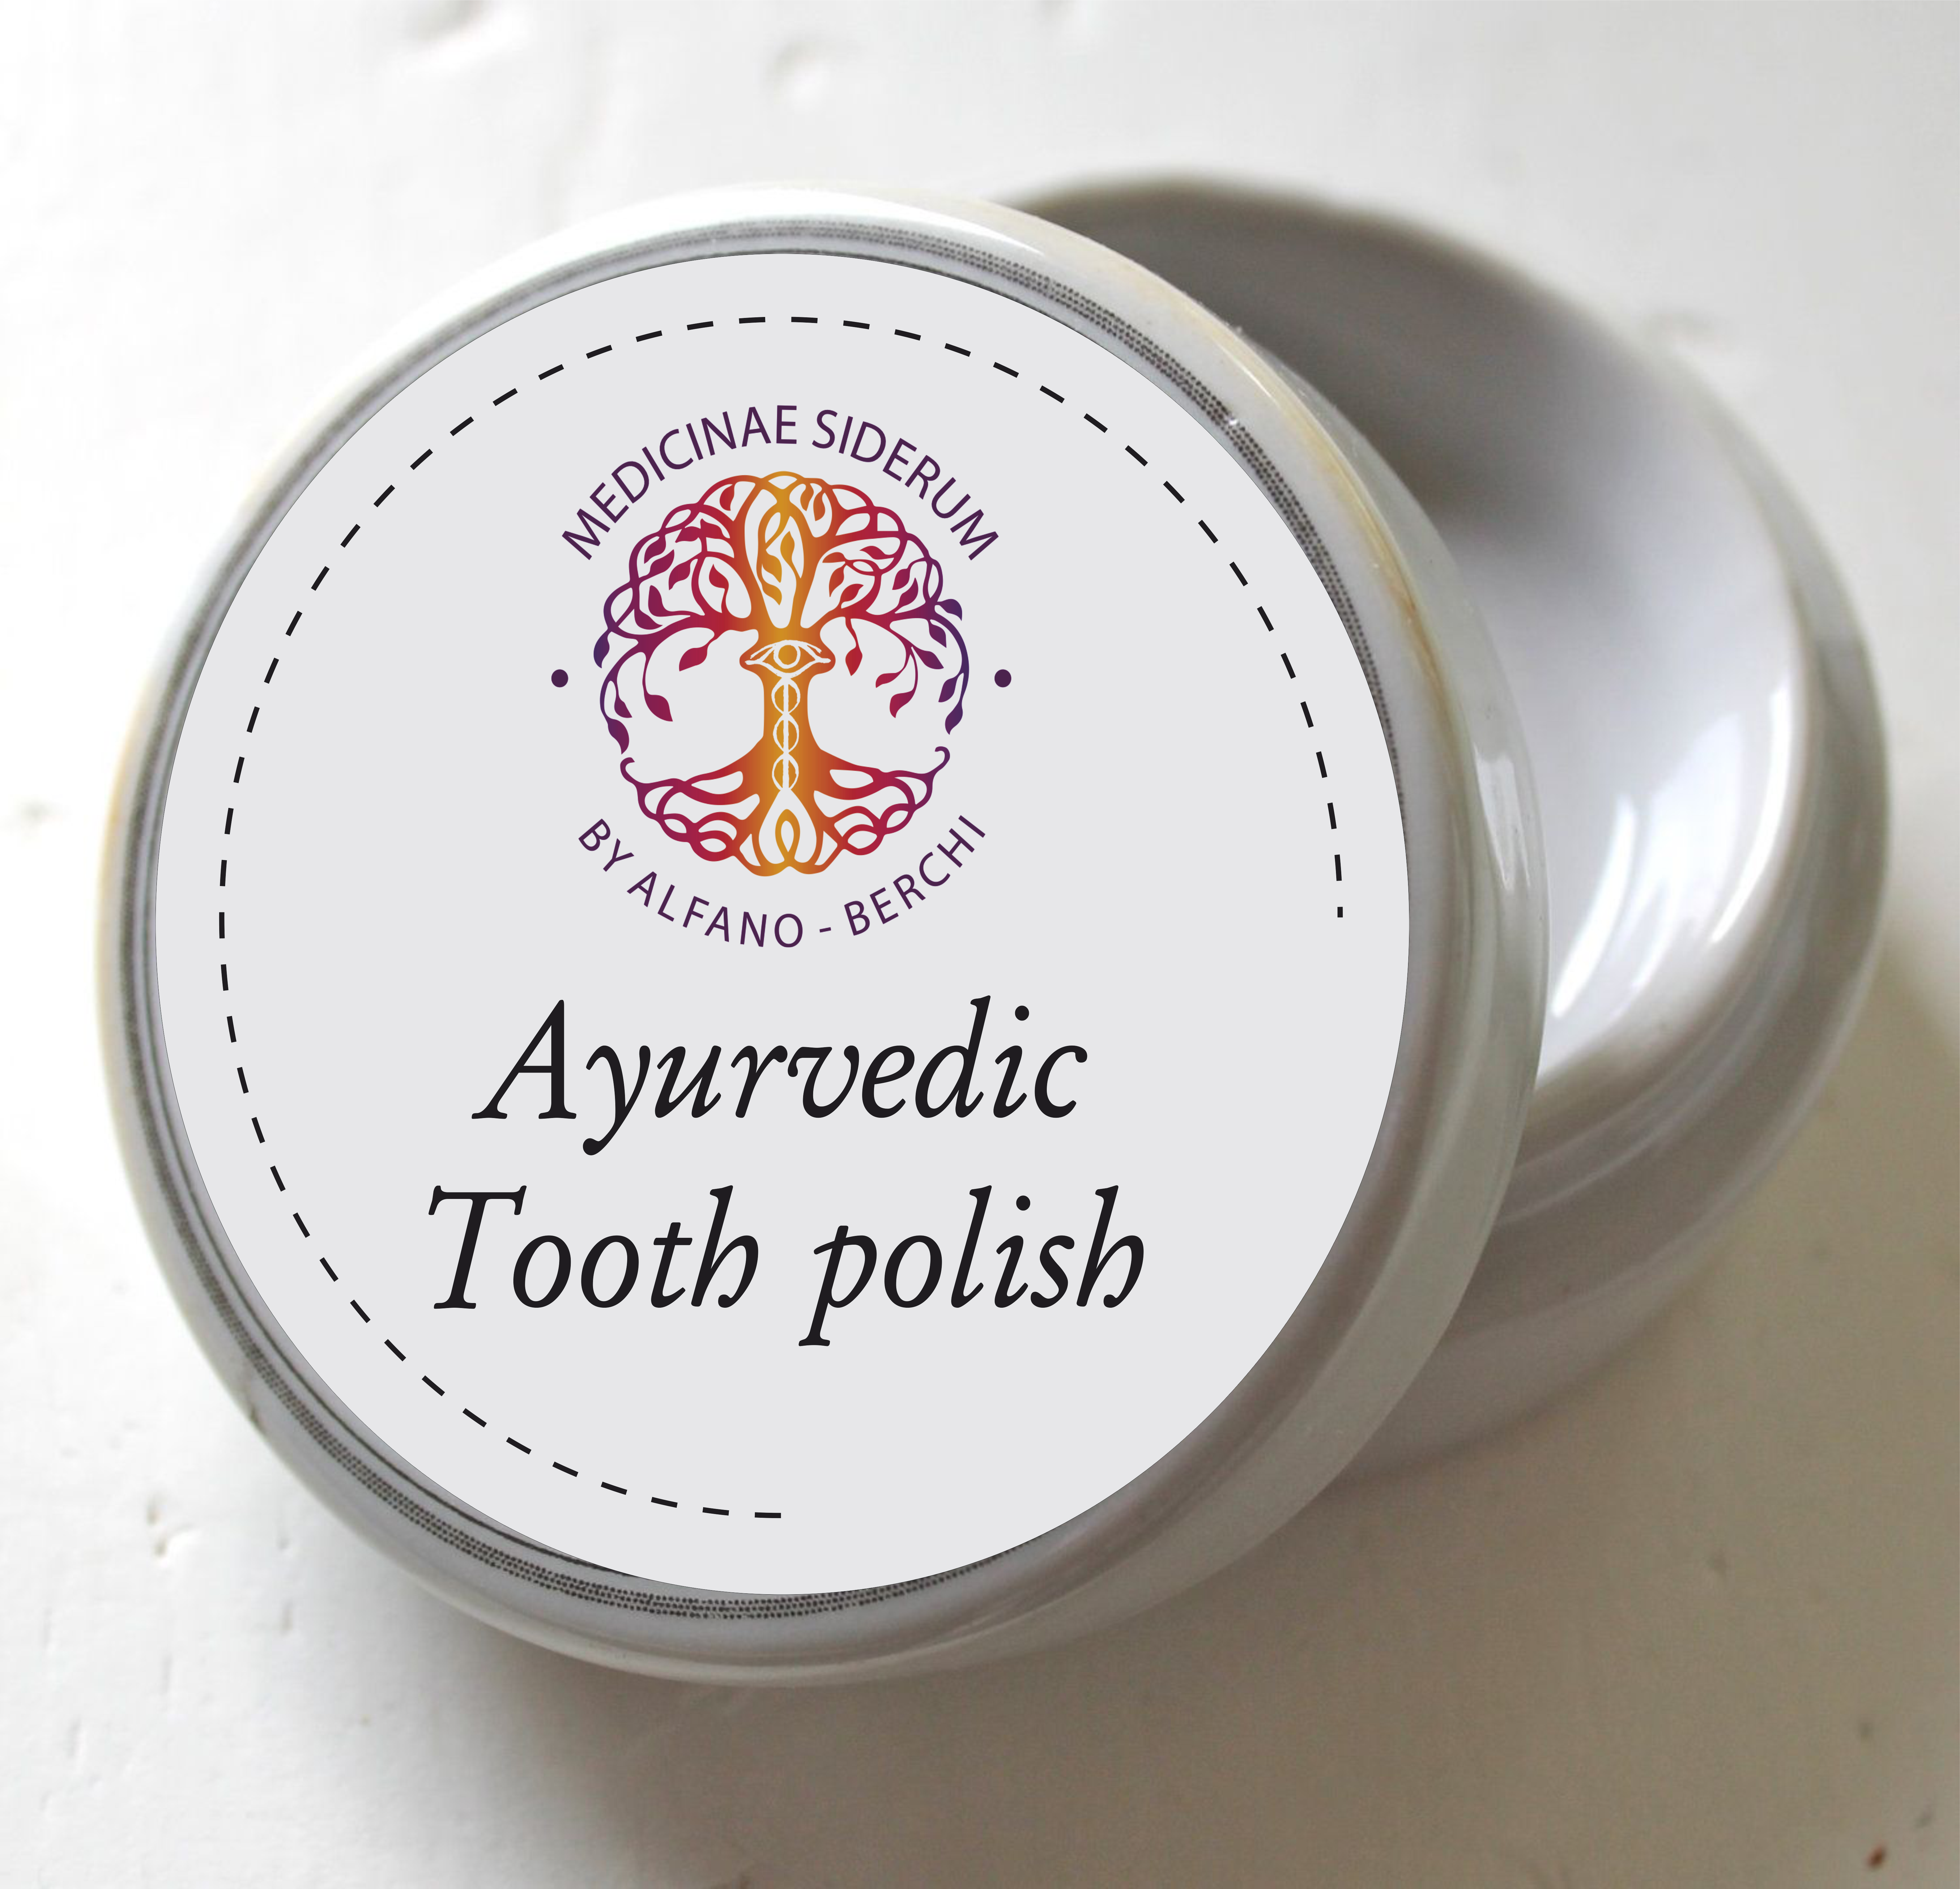 Ayurvedic tooth polish